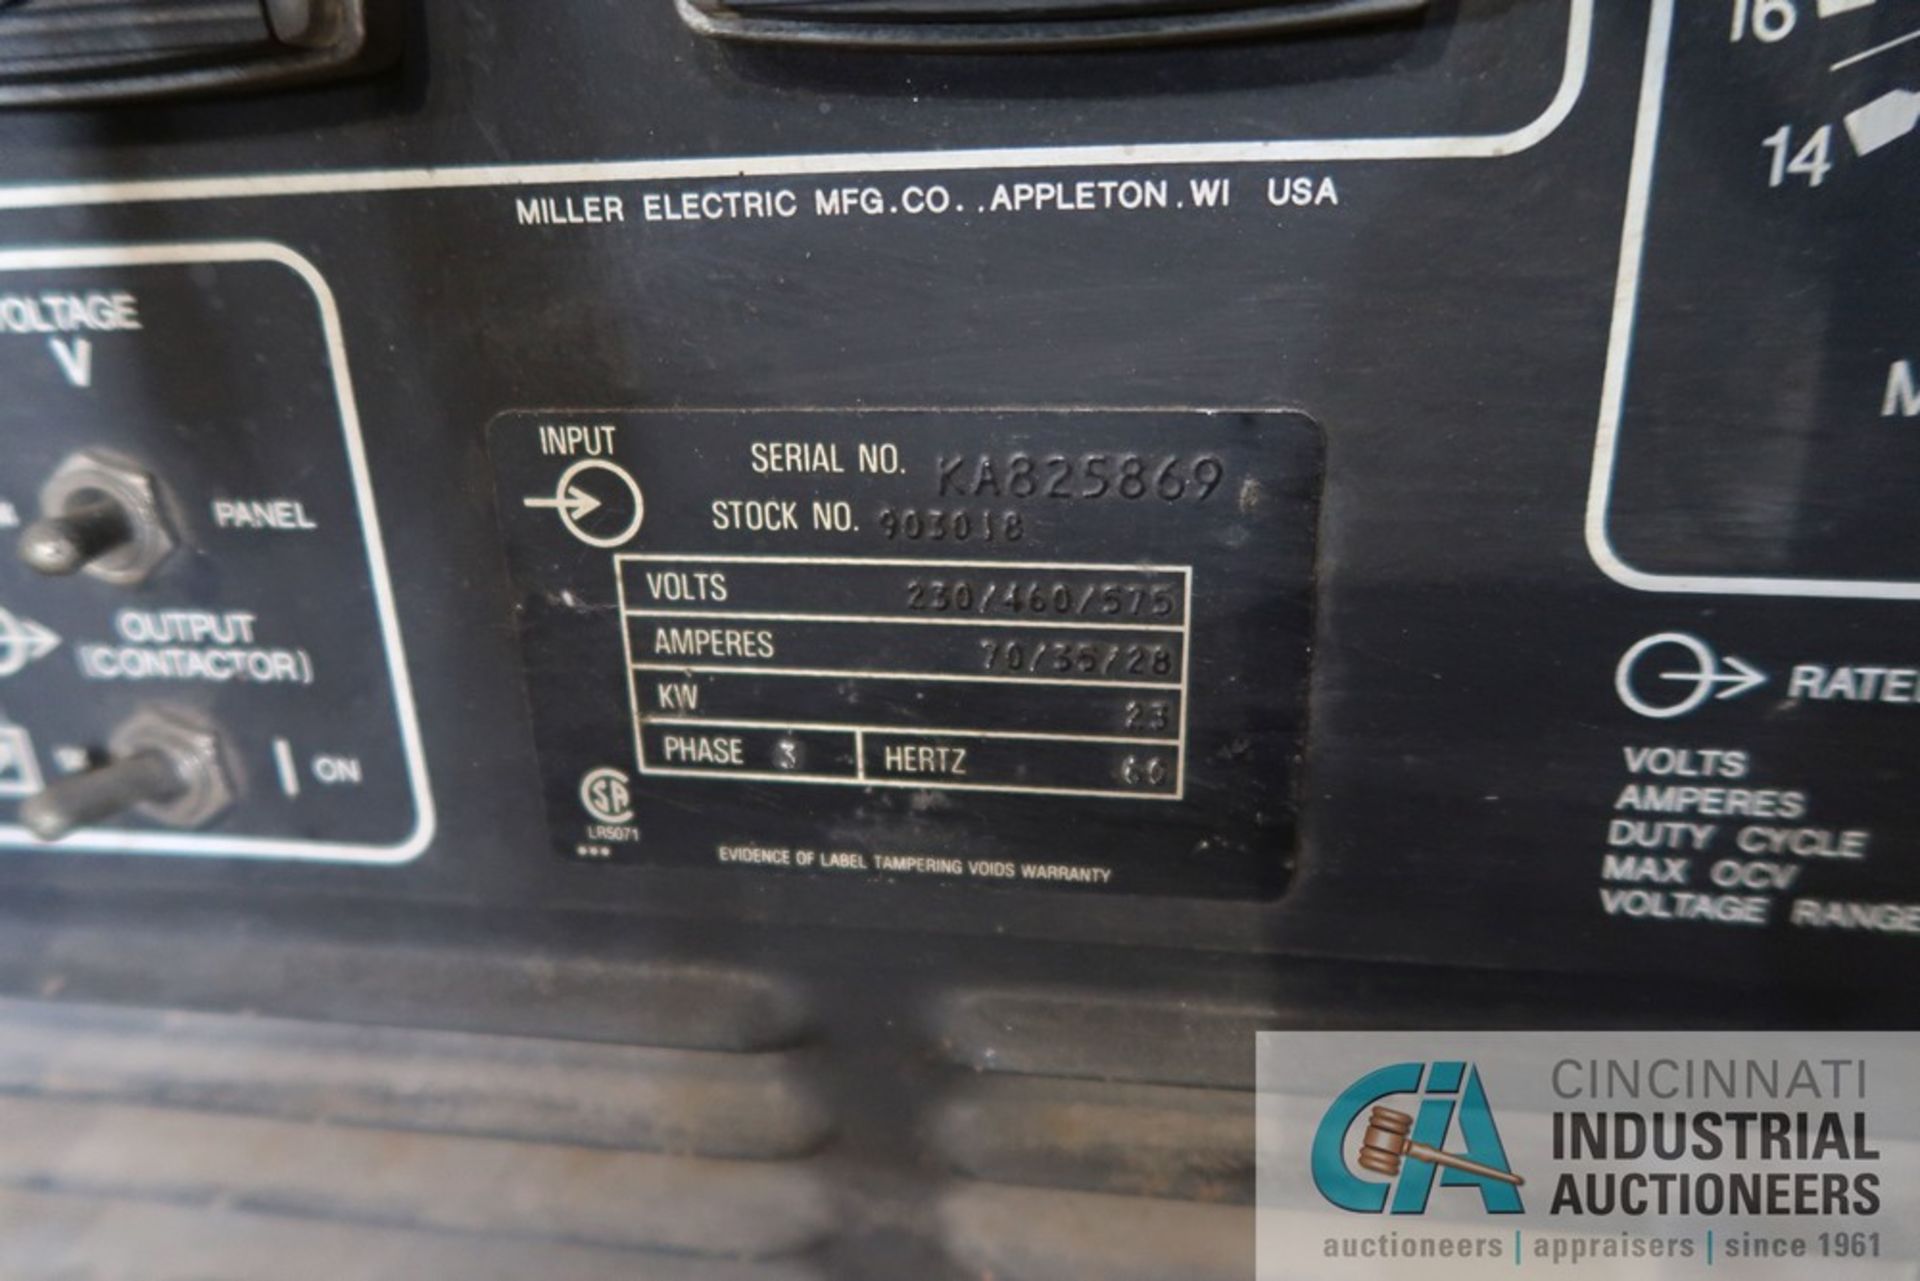 450 AMP MILLER MODEL DELTAWELD 451 CONSTANT VOLTAGE DC ARC WELDING POWER SOURCE S/N KA825869 WITH - Image 4 of 6